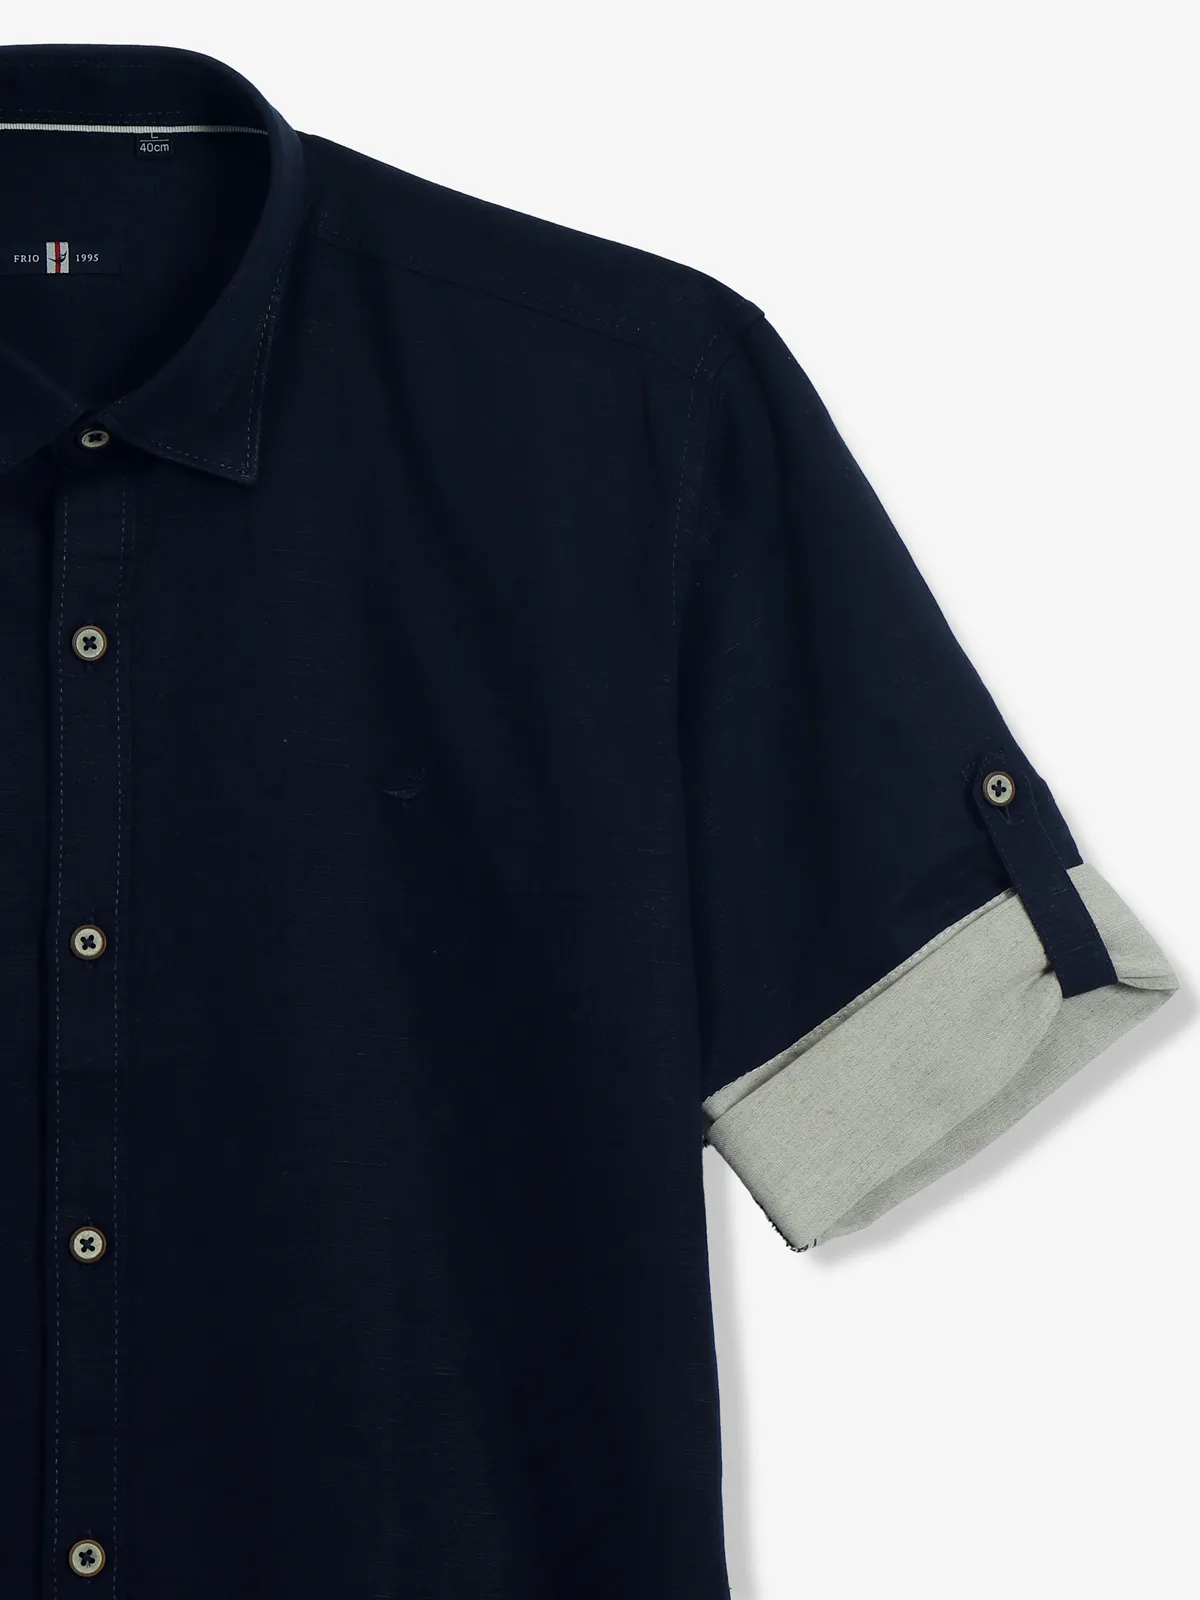 FRIO plain navy cotton shirt